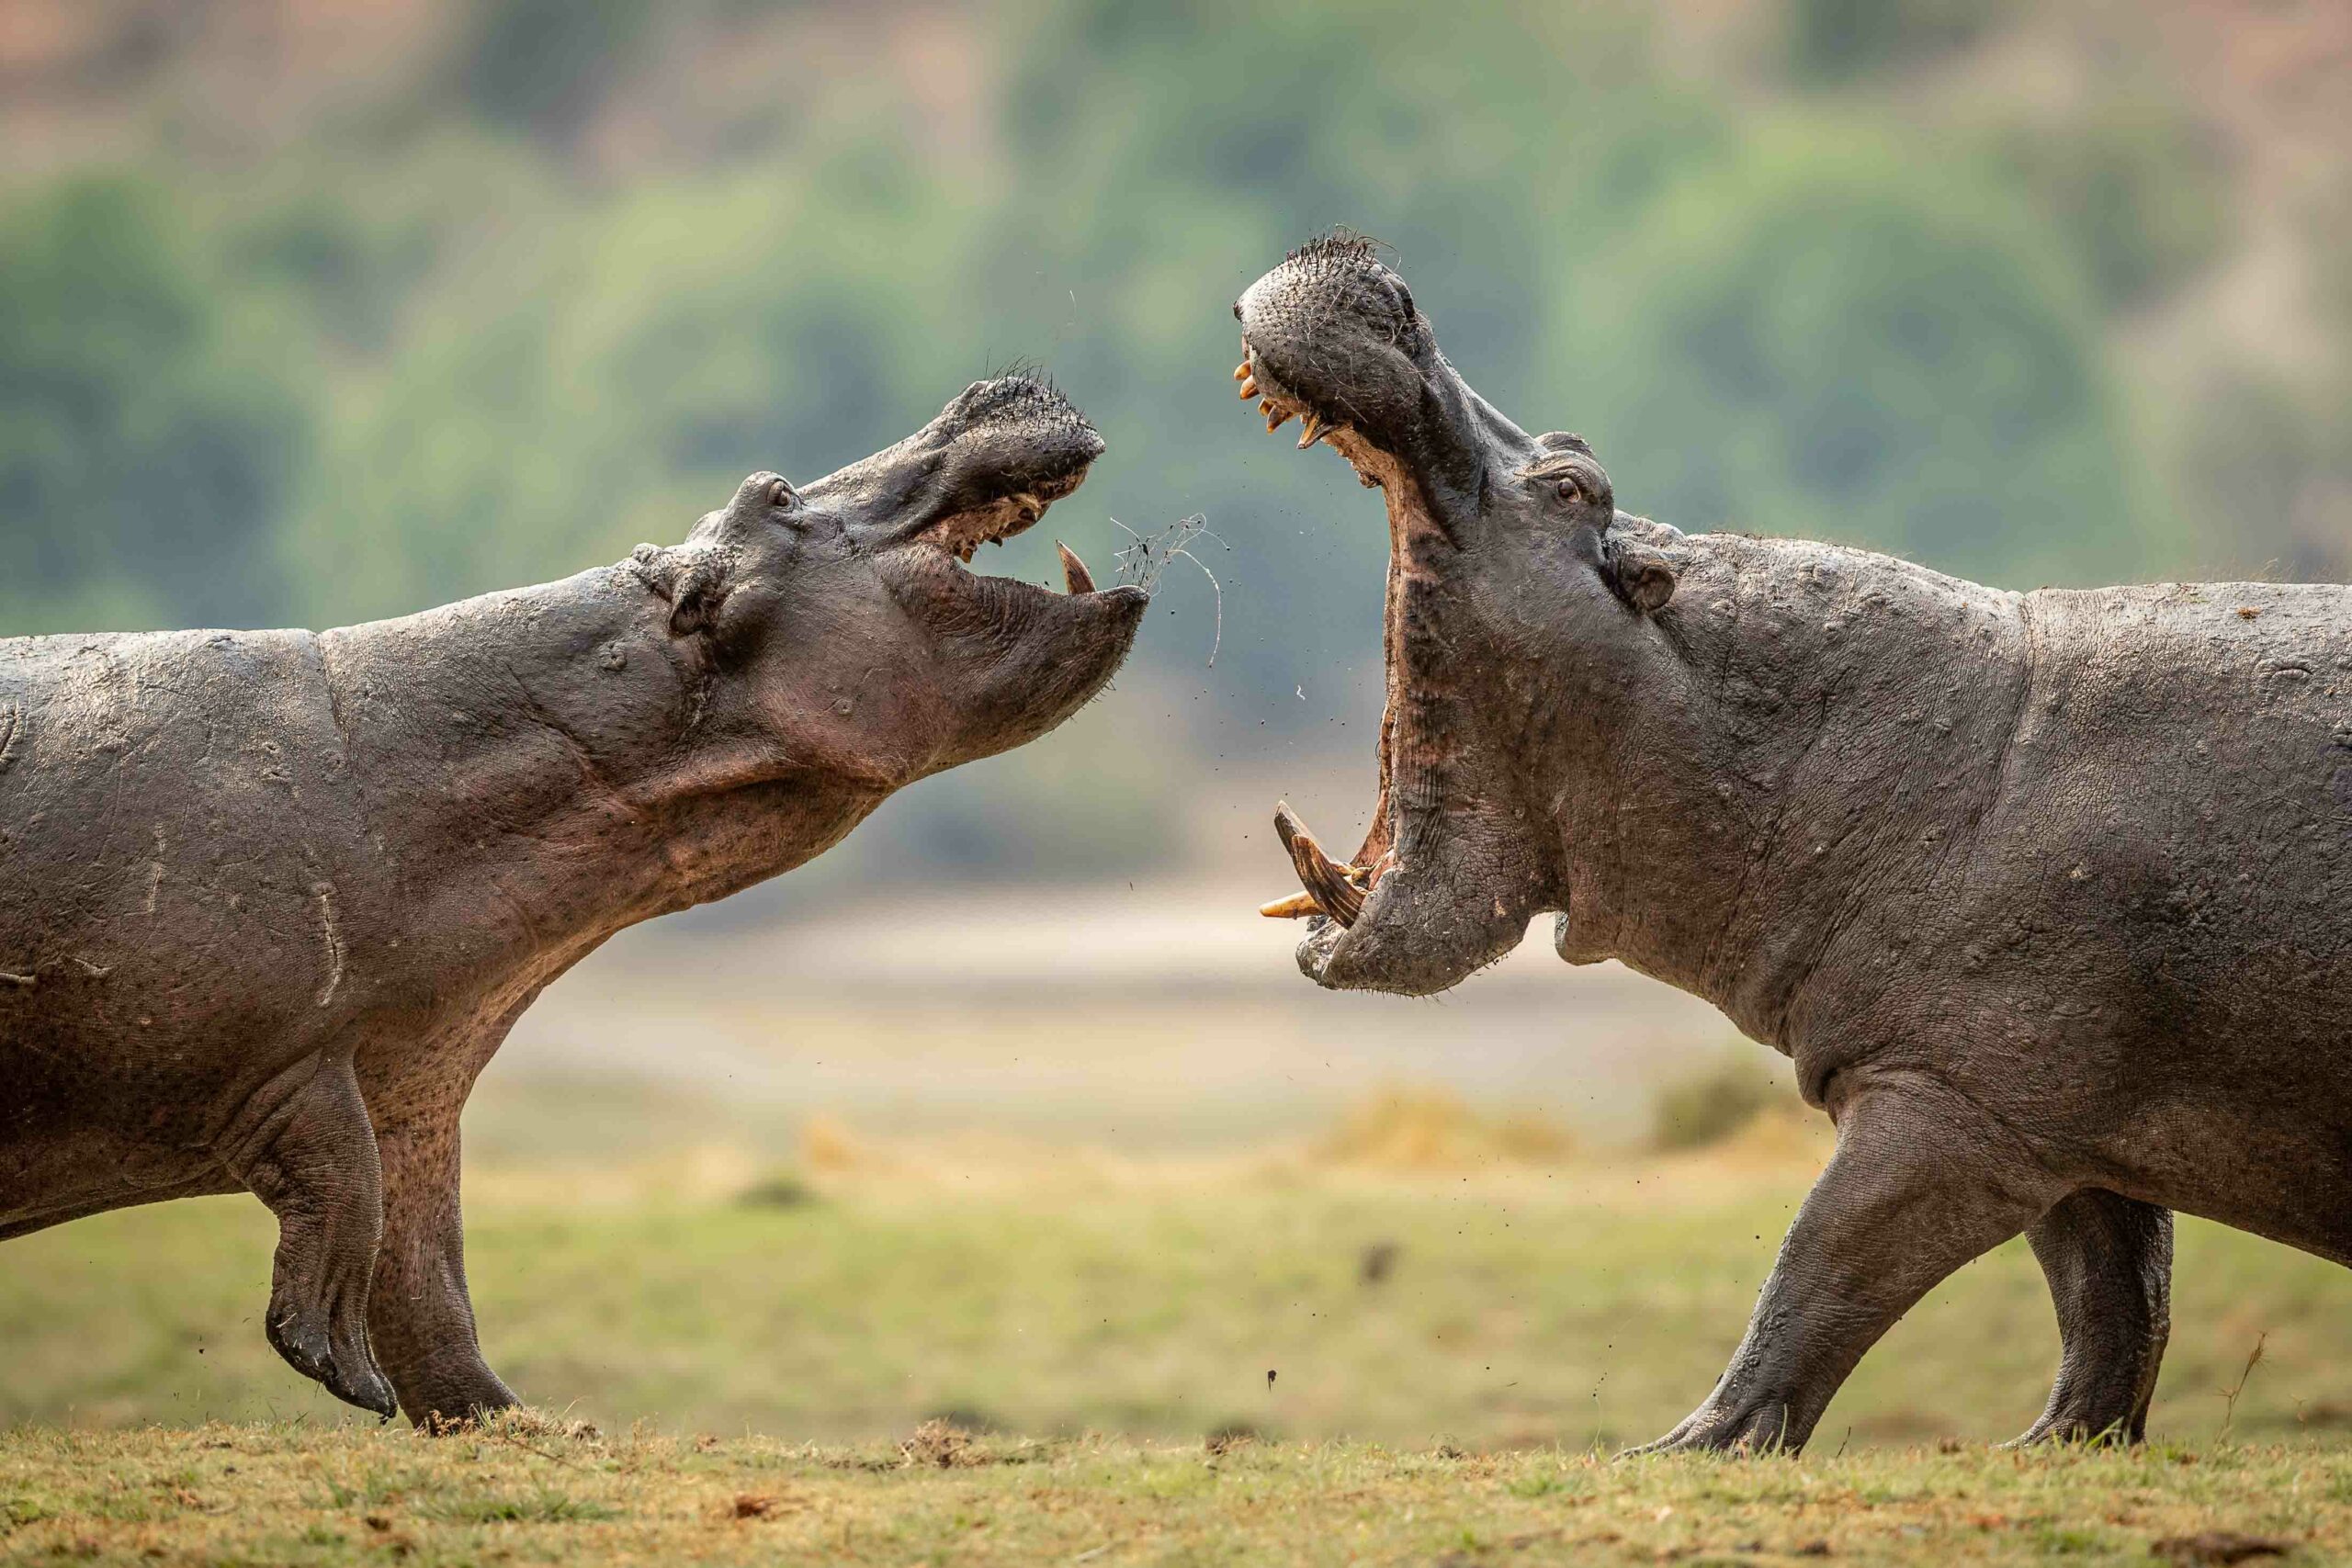 hippos fighting